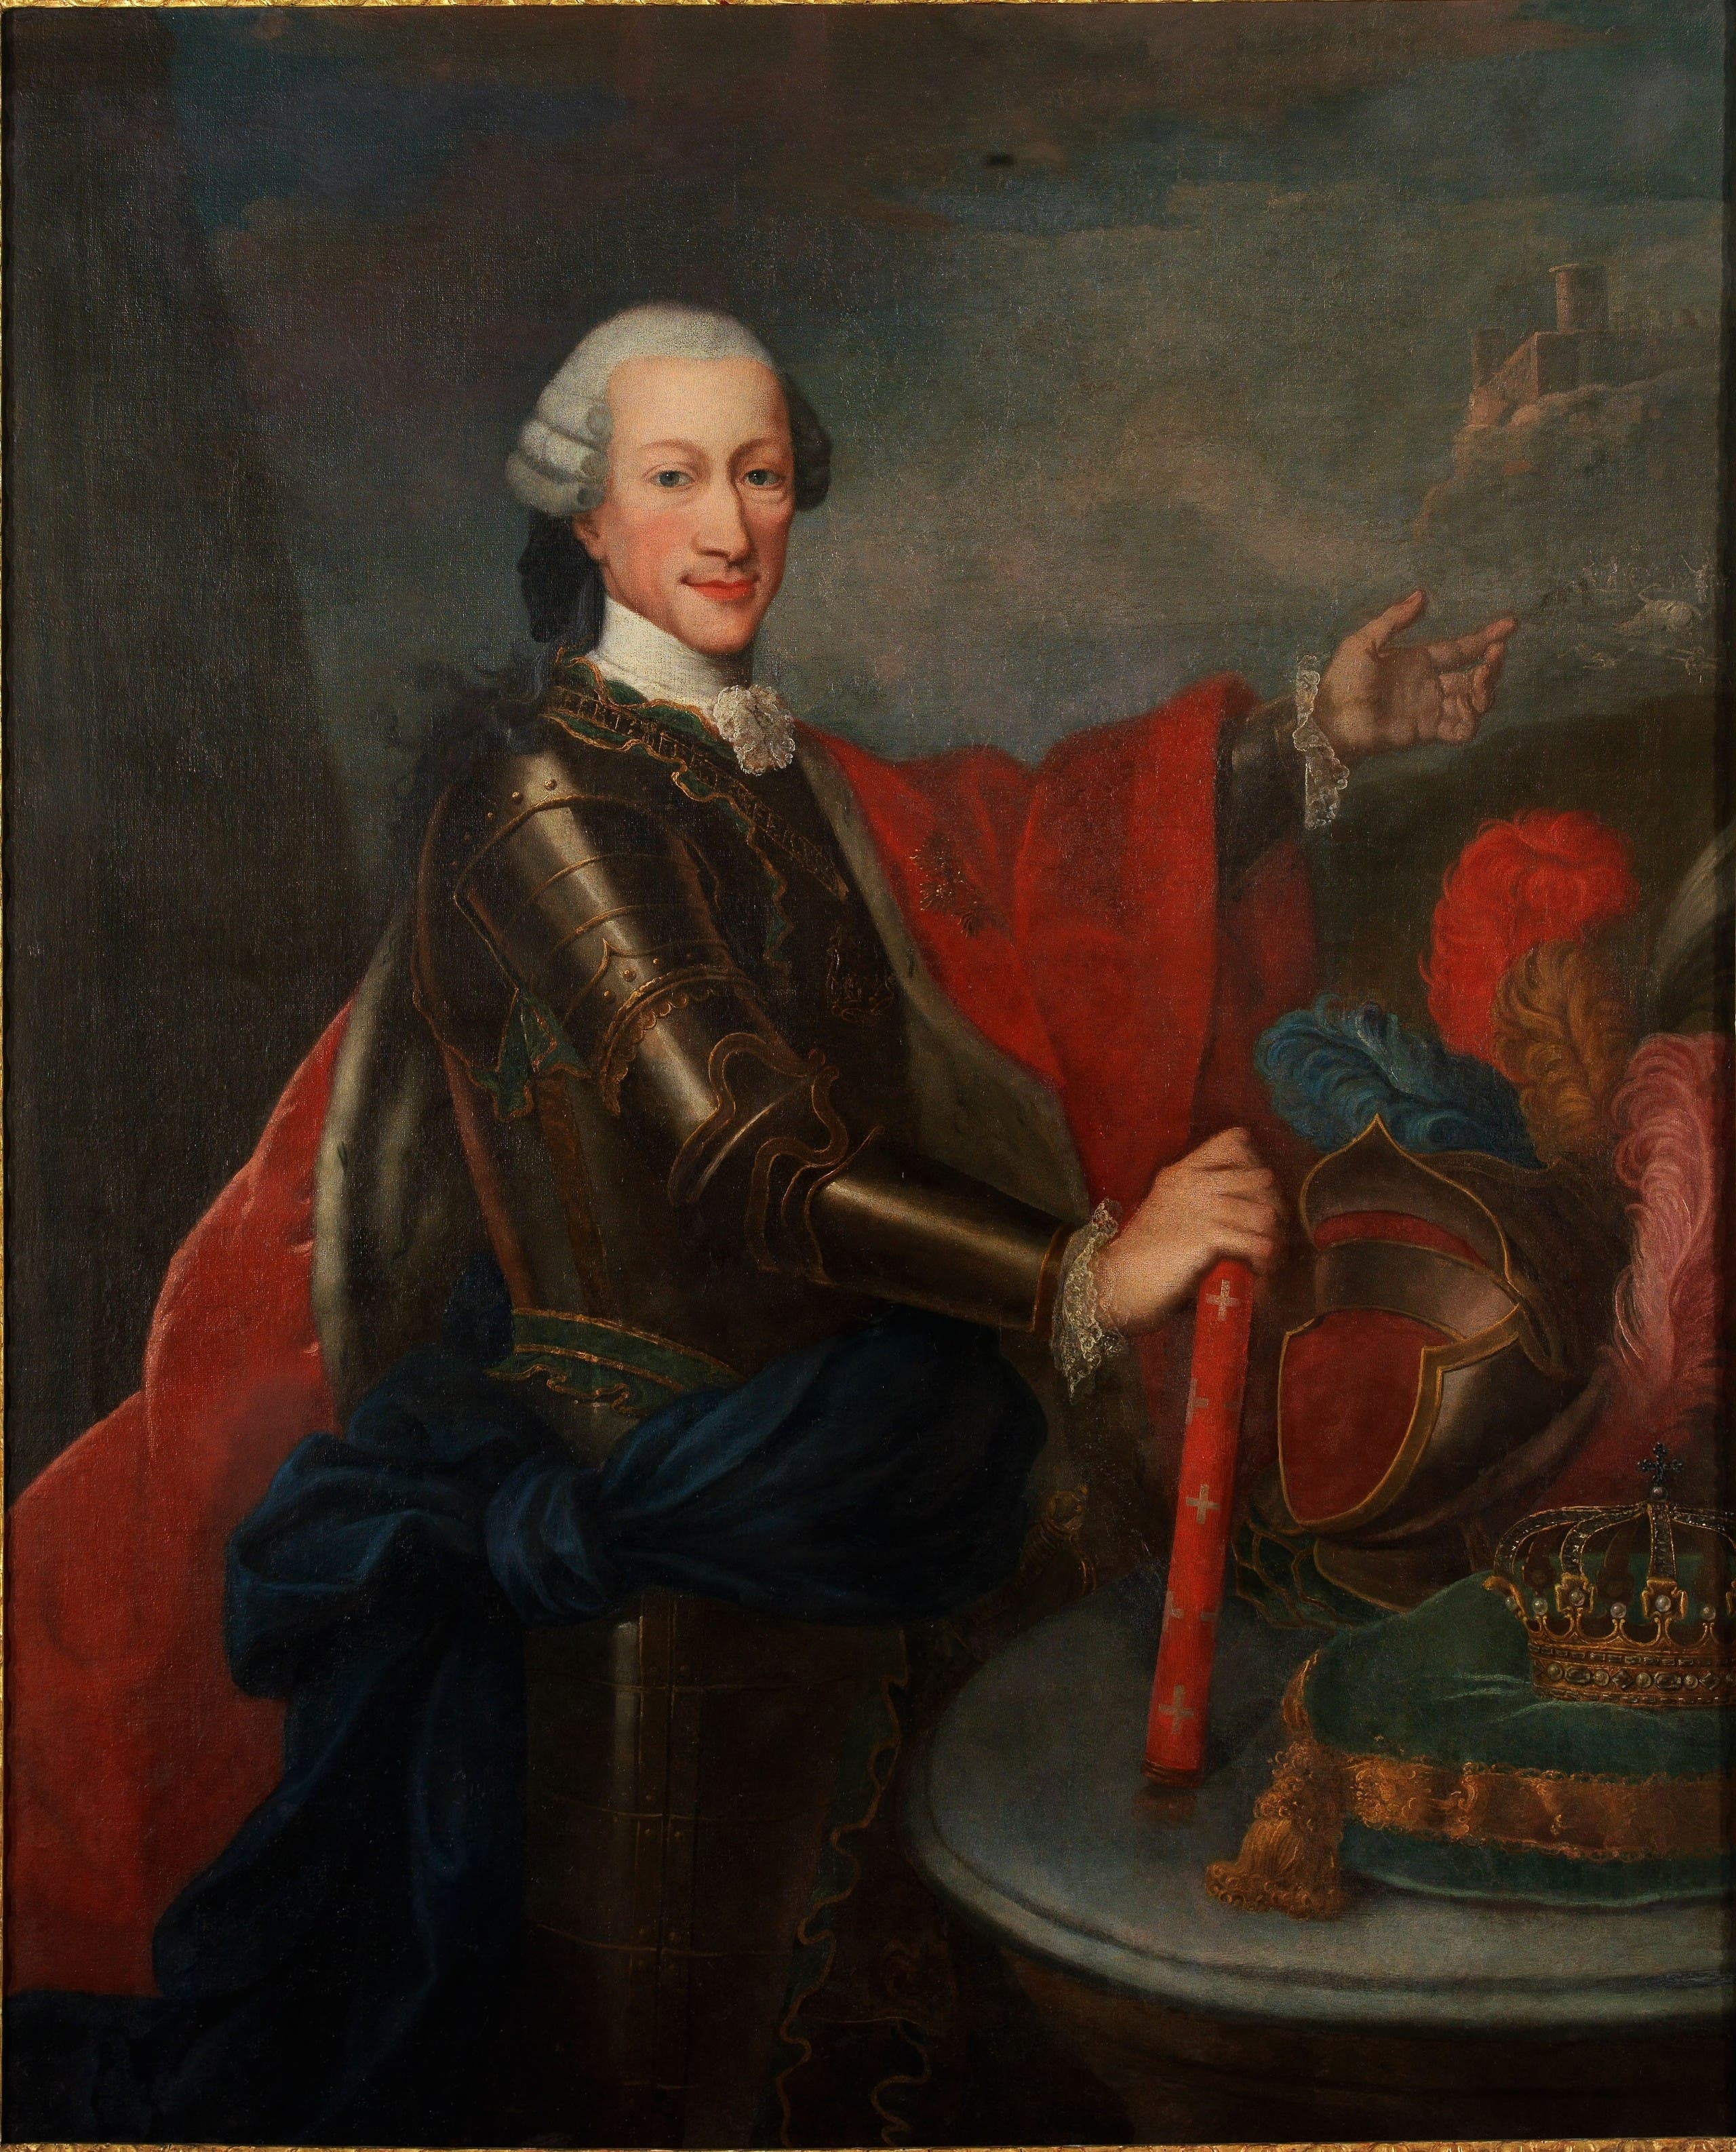 A portrait of the King of the Piedmontese Victor Amadeus III